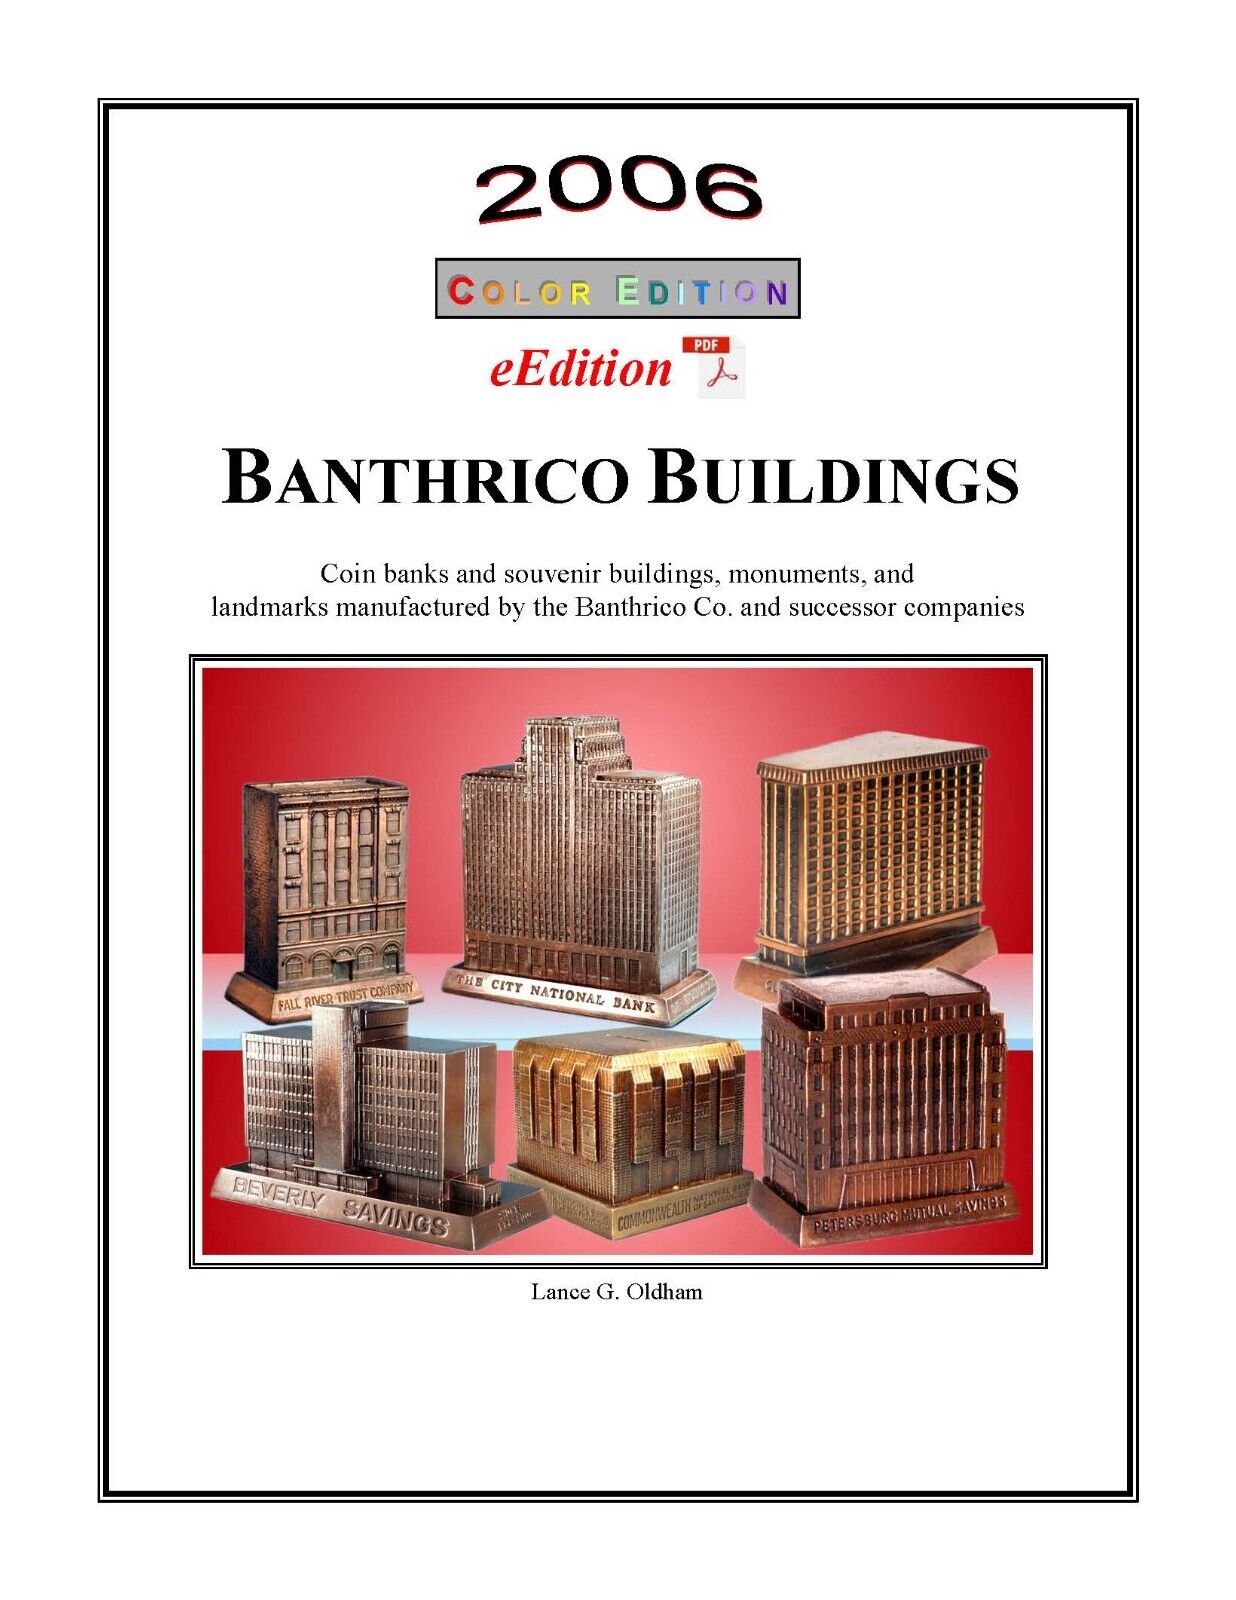 Banthrico Buildings 2006 eEdition